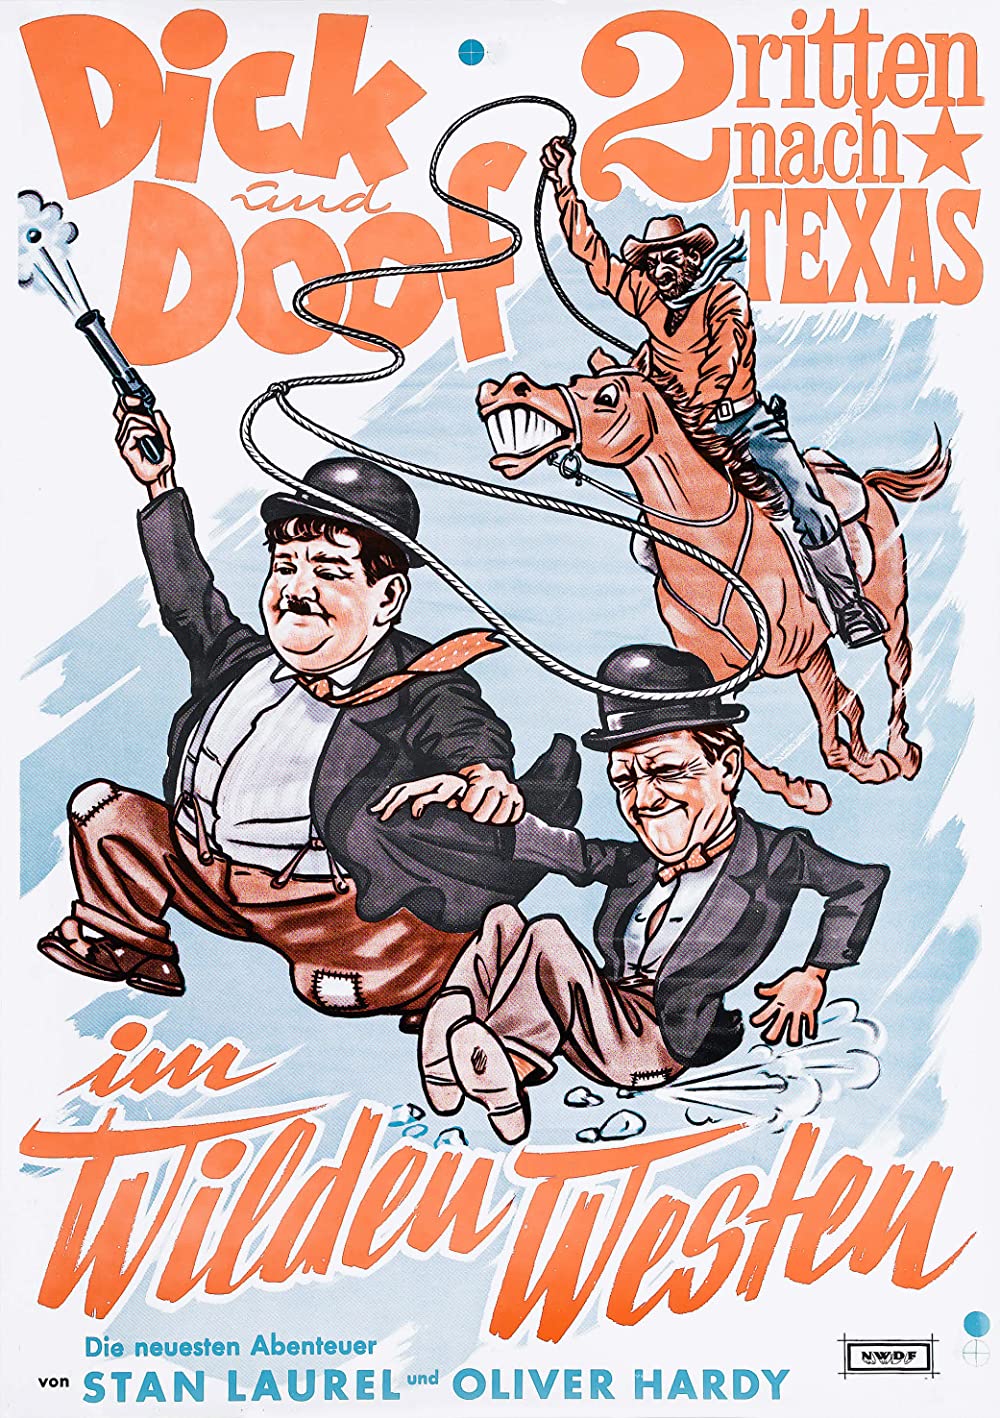 Filmbeschreibung zu Laurel & Hardy: Zwei ritten nach Texas